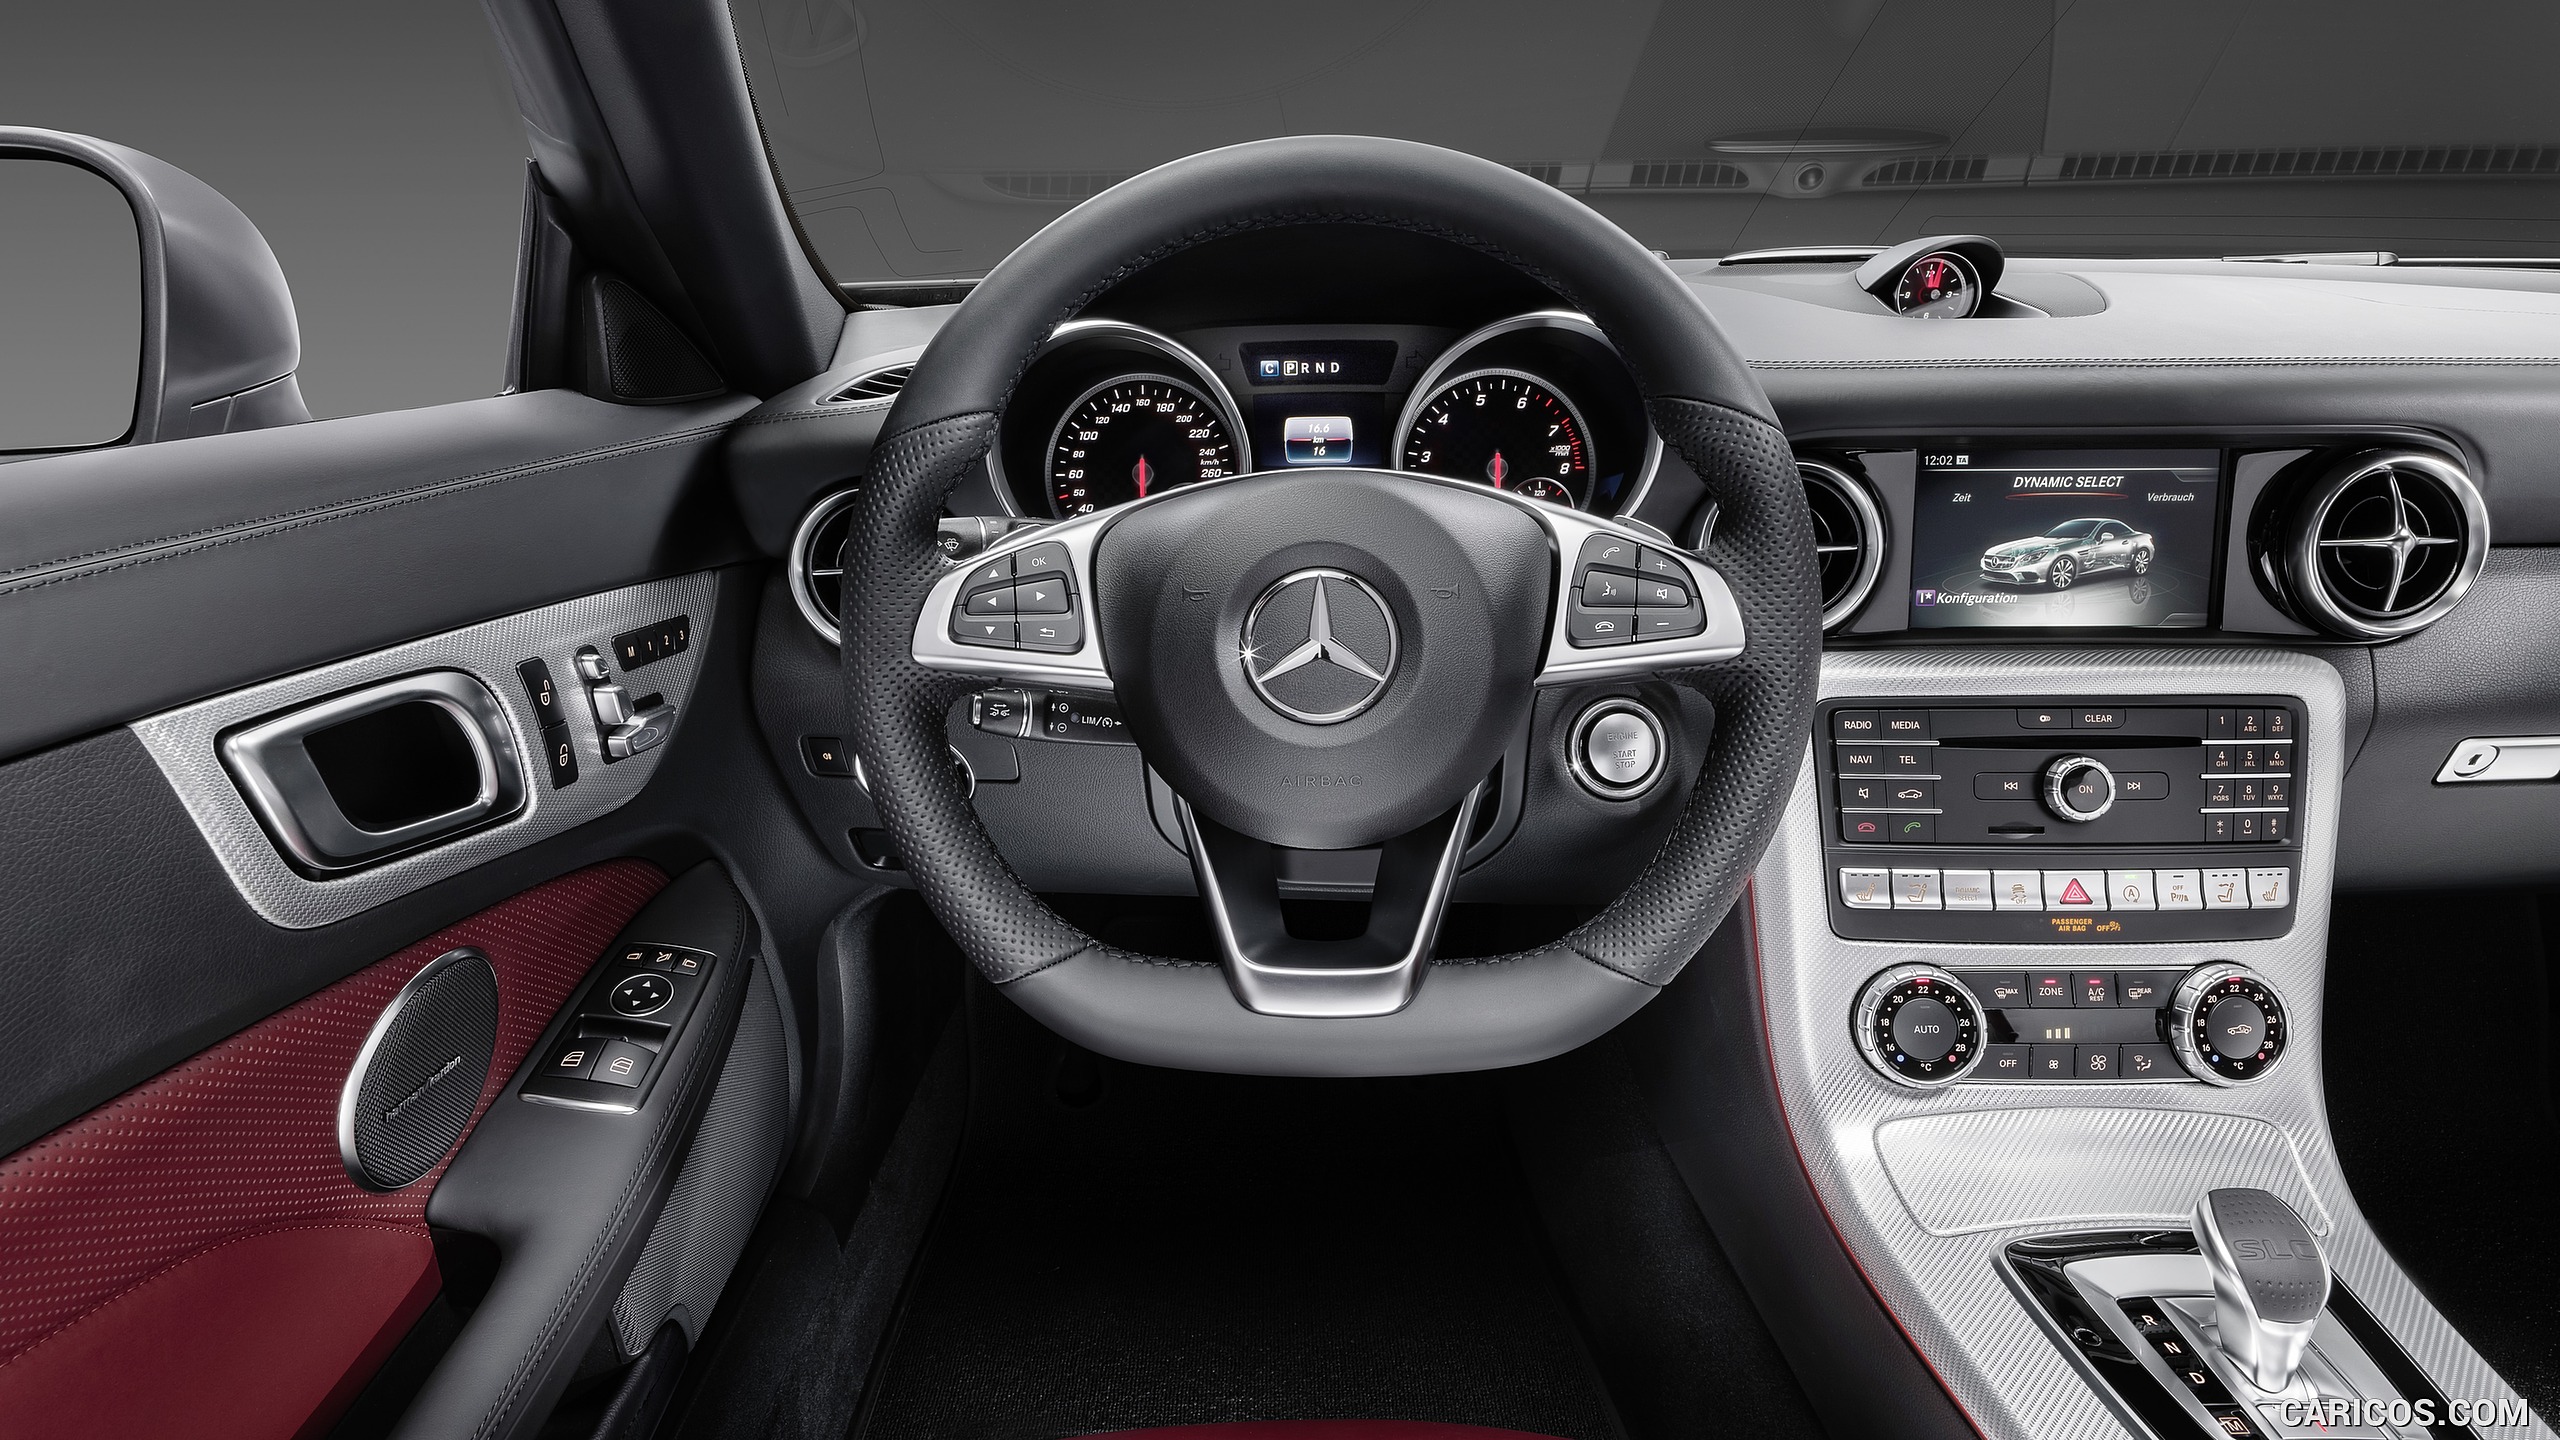 2017 Mercedes-Benz SLC 300 - Bengal Red/Black Interior, Cockpit, #37 of 81